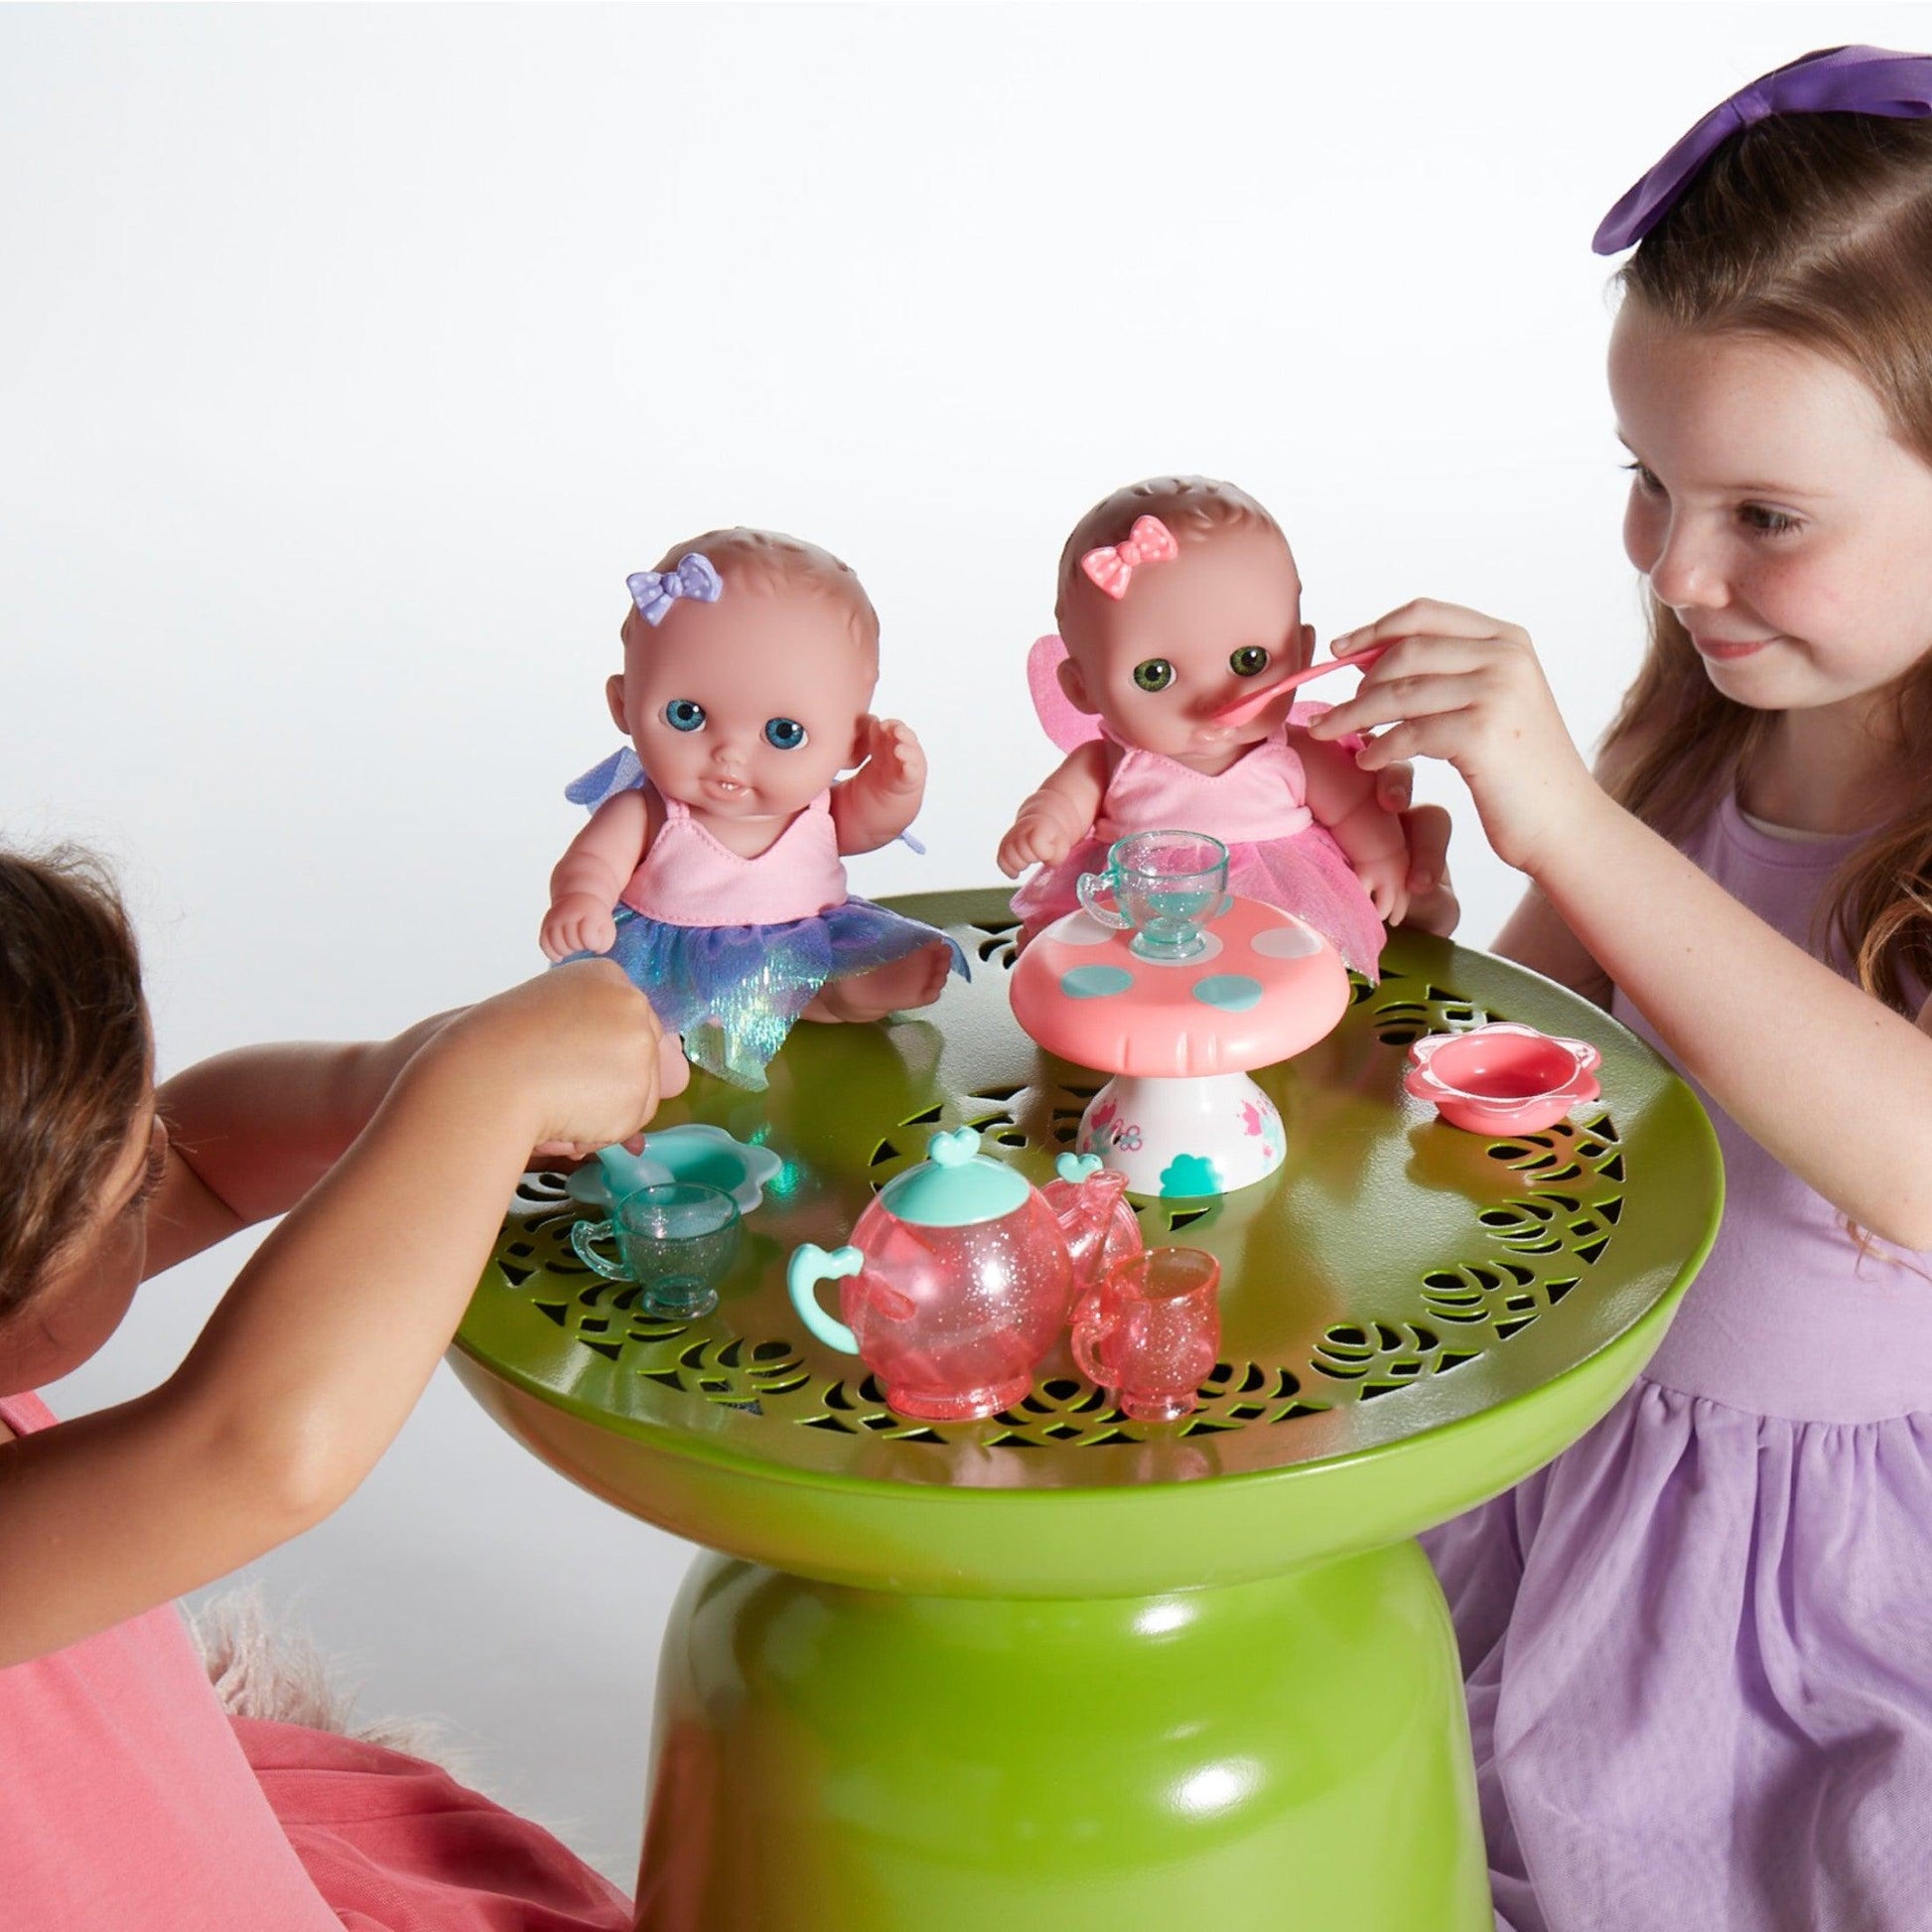 Lil' Cutesies Baby Dolls All-Vinyl 8.5" Twin Fairy Tea Gift Set For Children 2+ - JC Toys Group Inc.